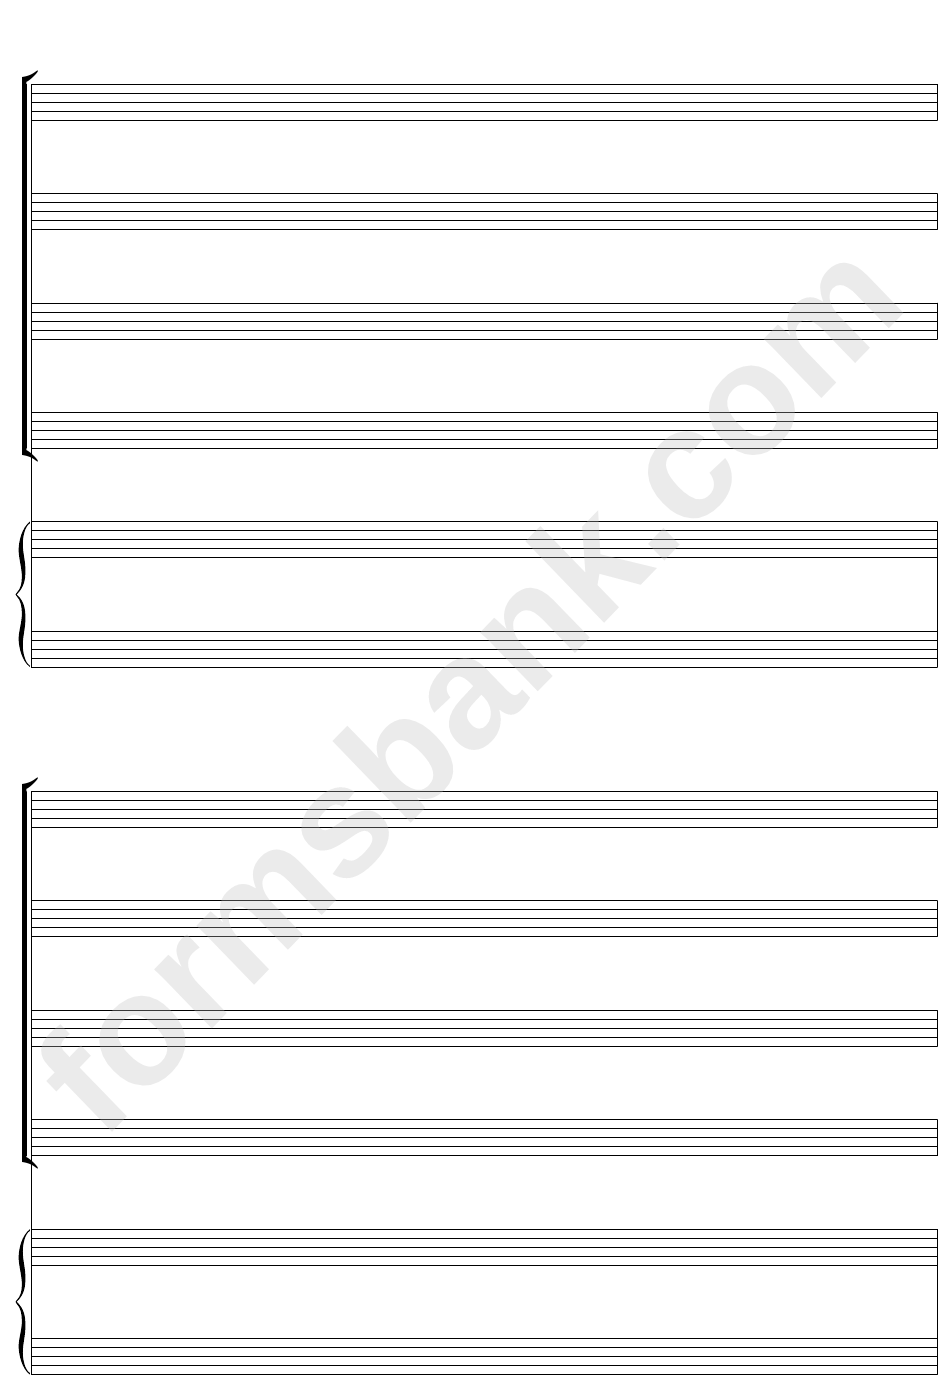 Keyboard + Four, Blank Clef (A4 Portrait) Blank Sheet Music